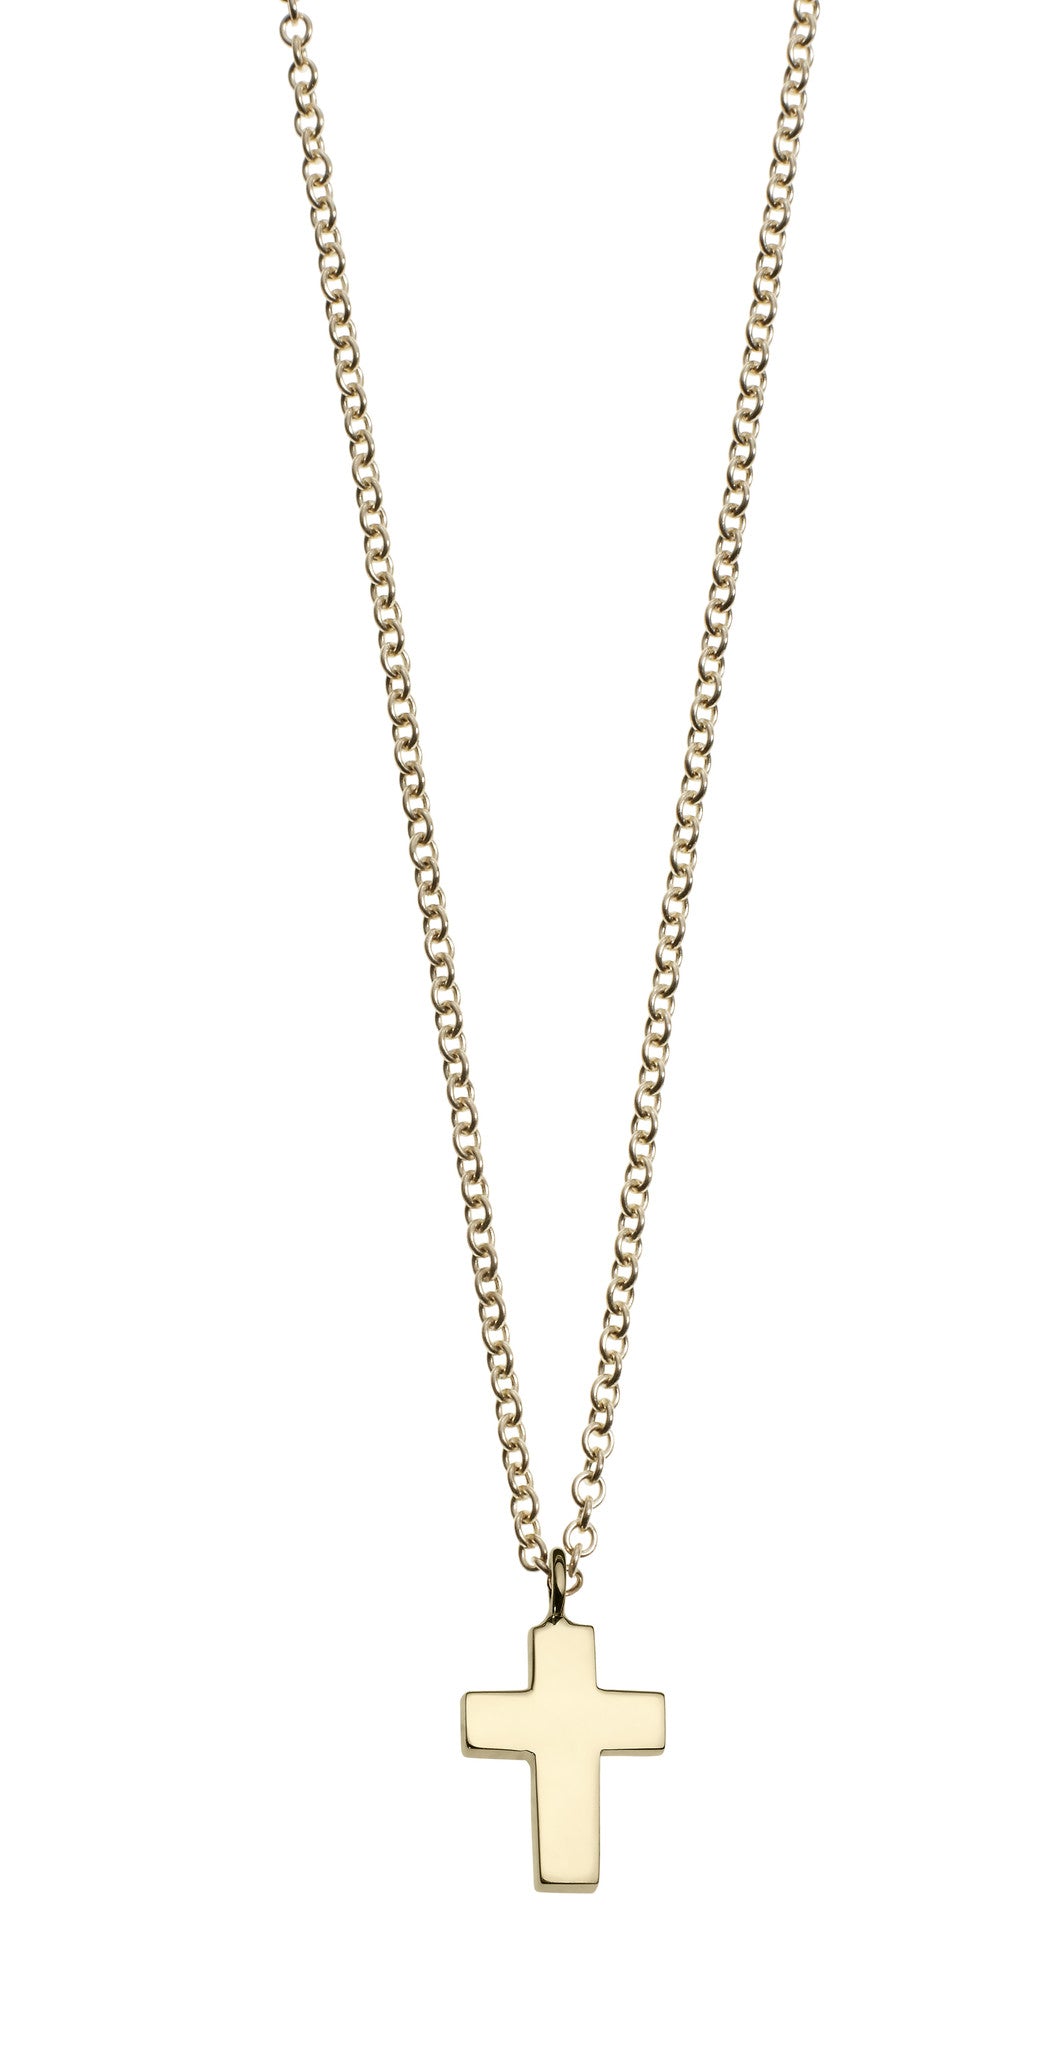 18k gold Cross Necklace - Finn by Candice Pool Nesitat